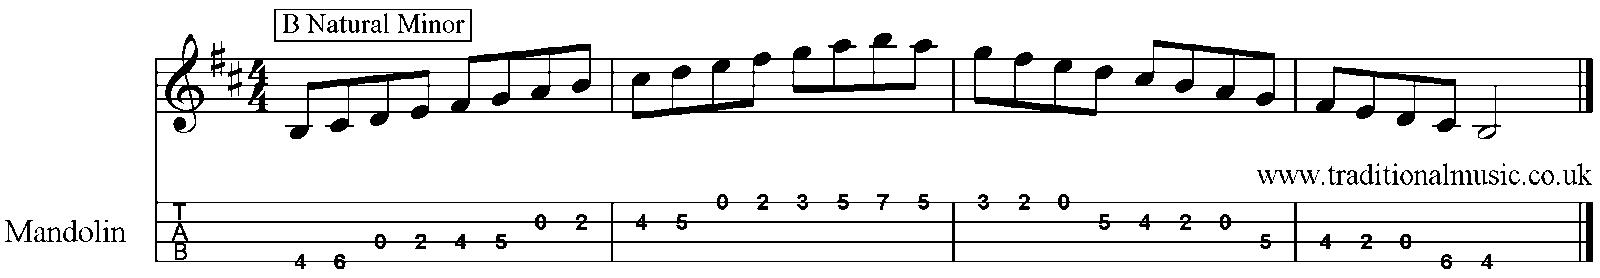 Minor Scales for Mandolin B 